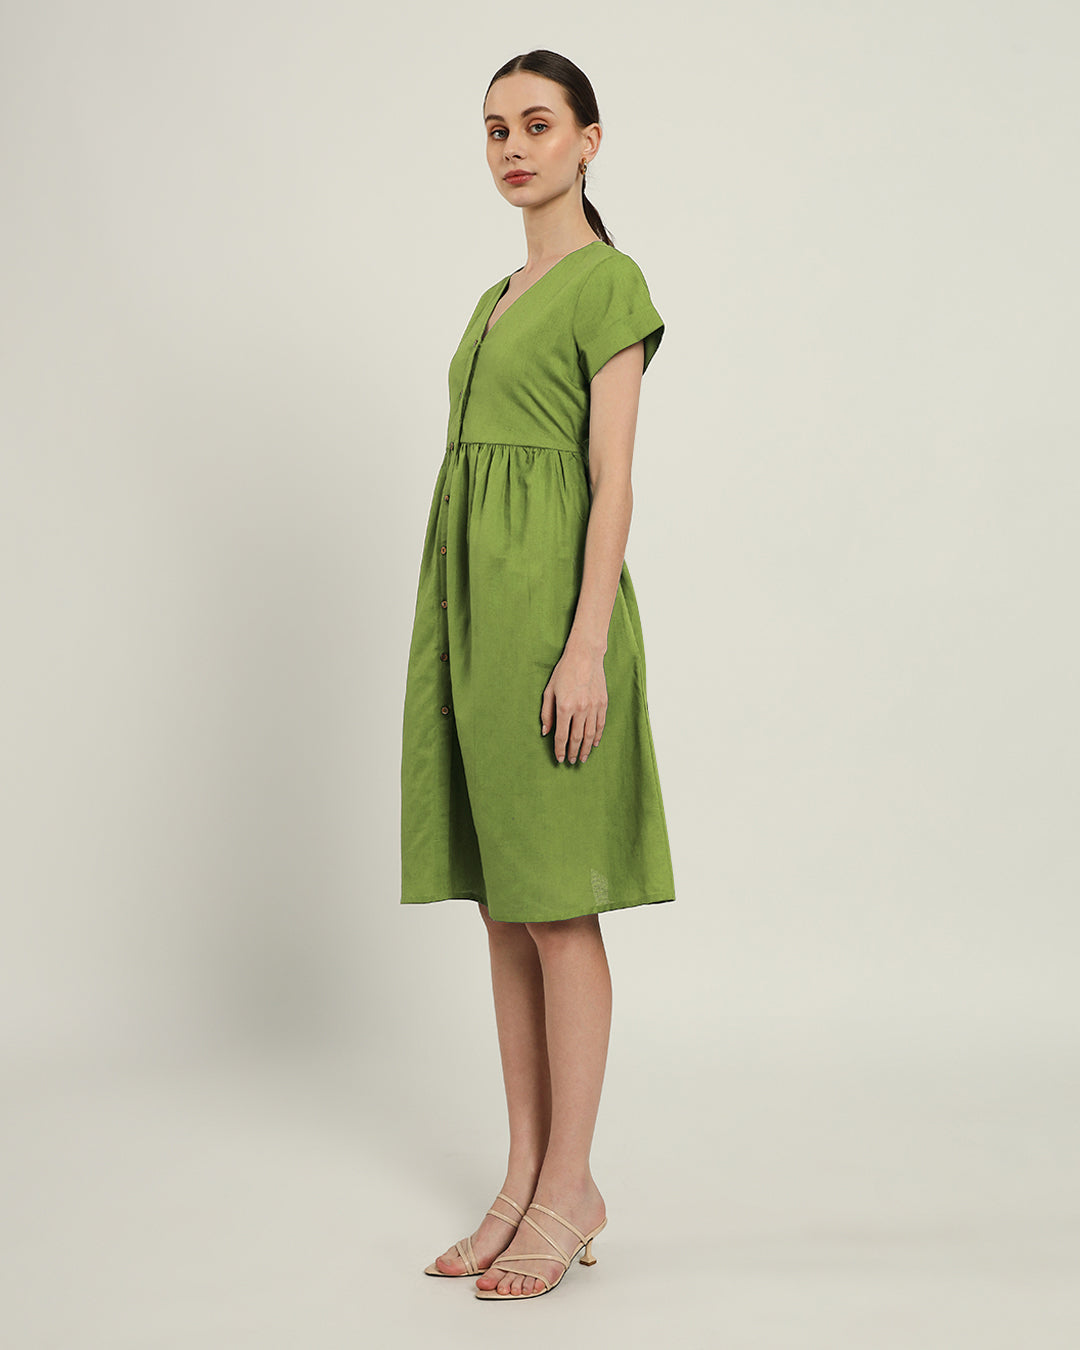 The Valence Fern Cotton Dress